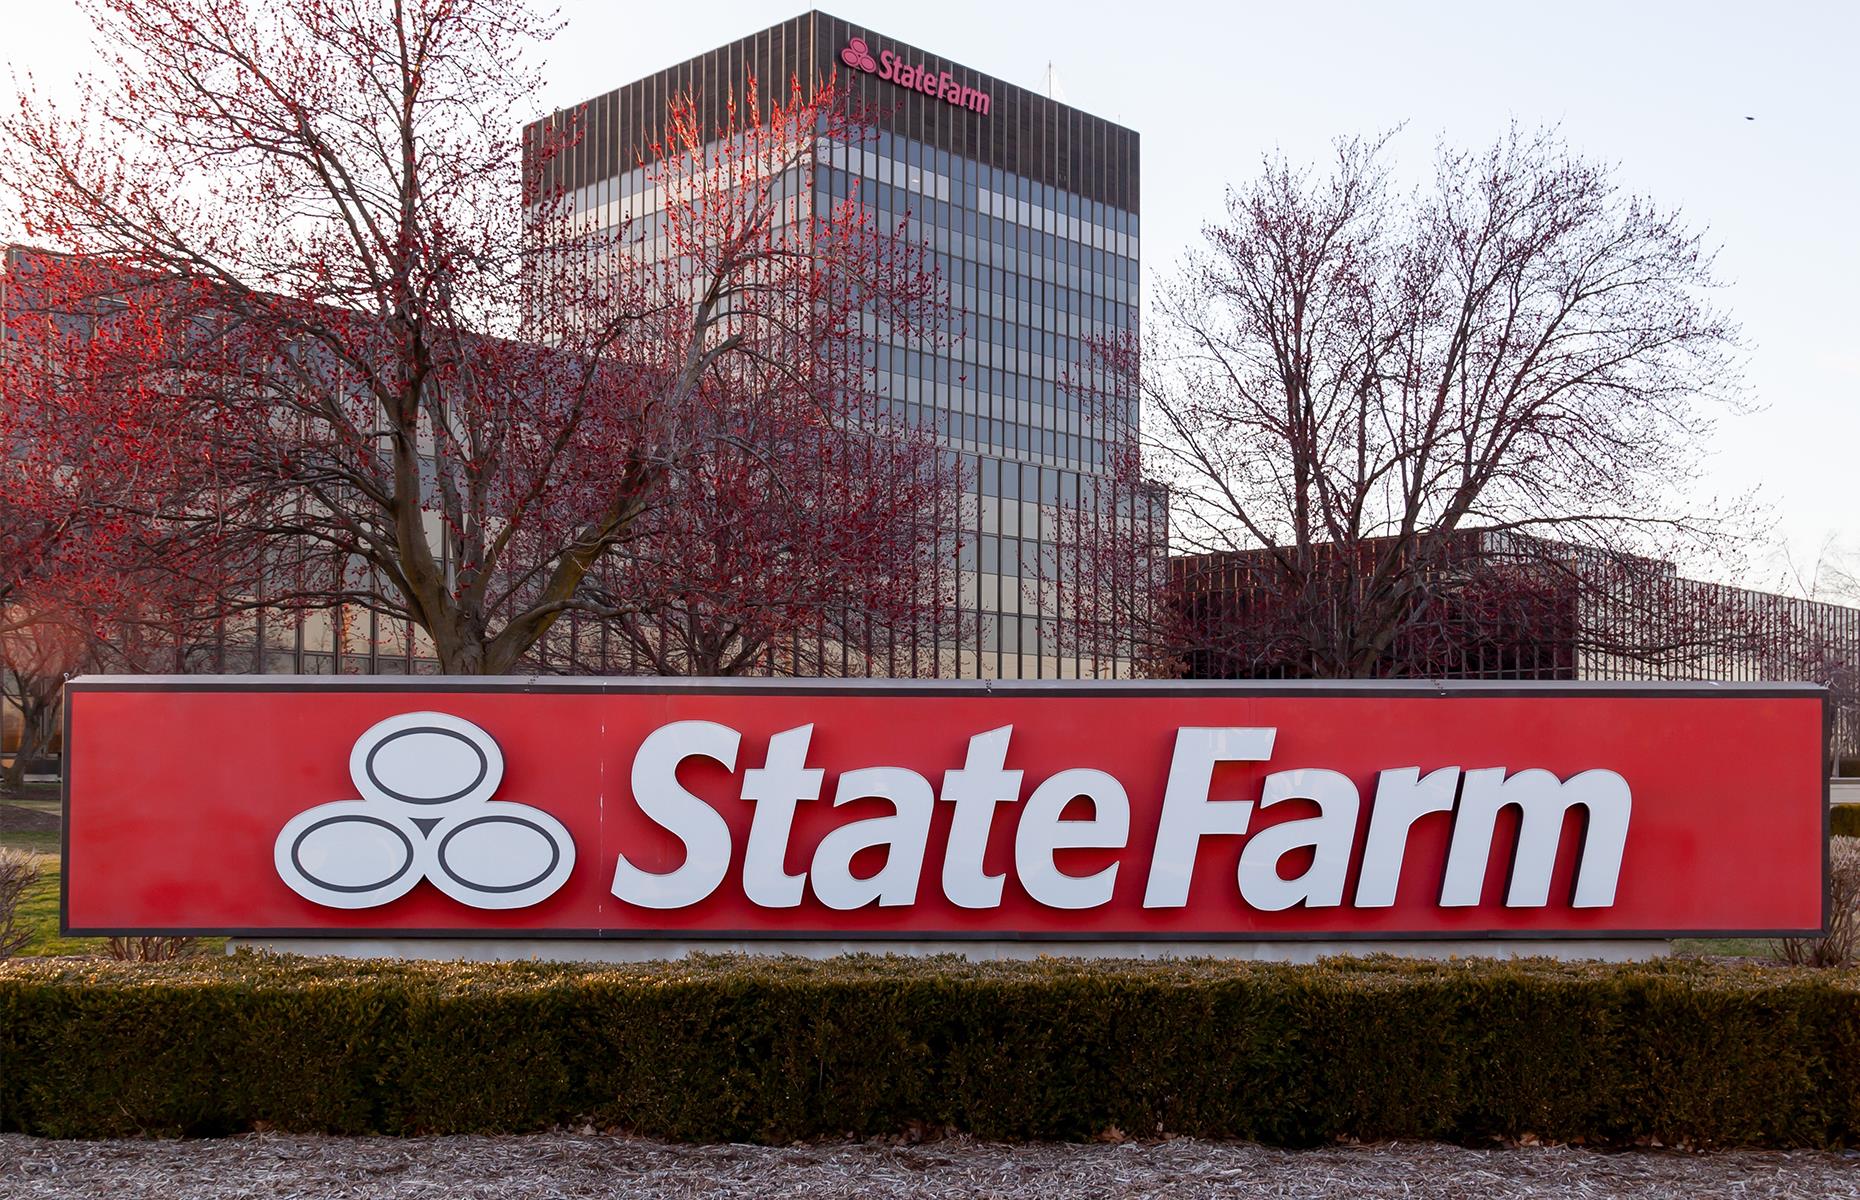 42. State Farm Insurance